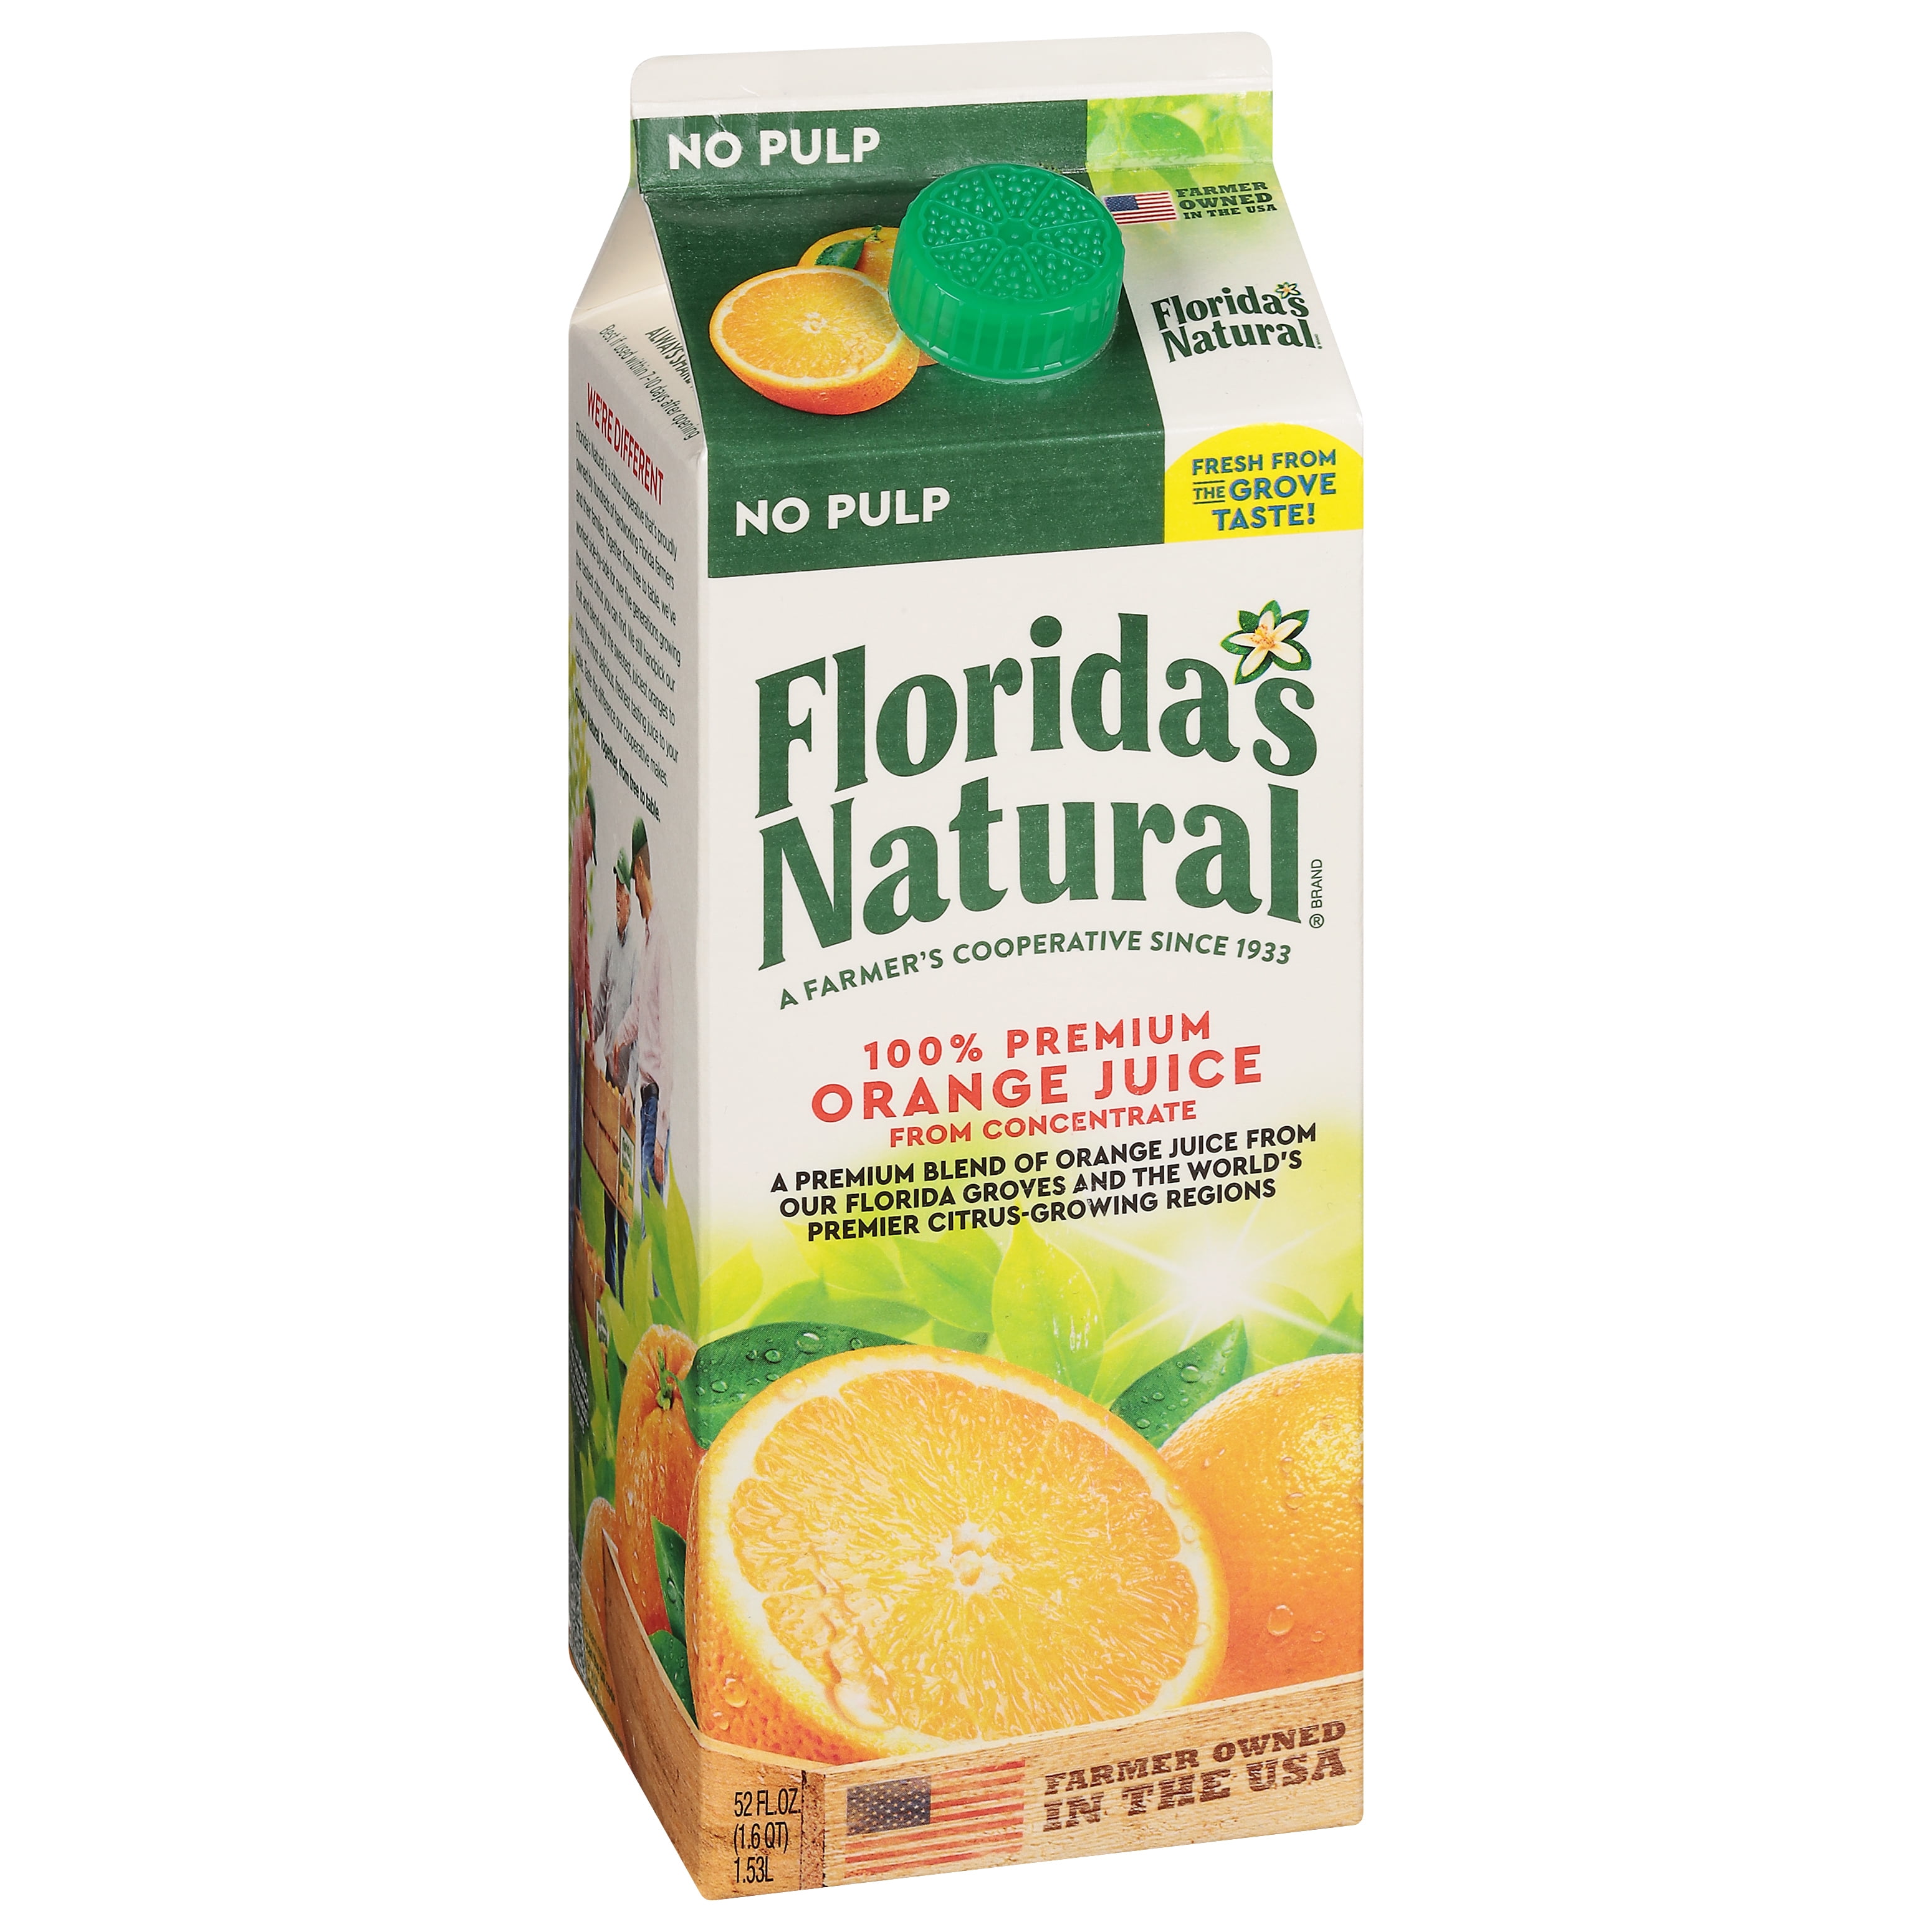 Uncle Matt's Organic | Organic Orange Juice with Pulp - 52oz (4 bottles)